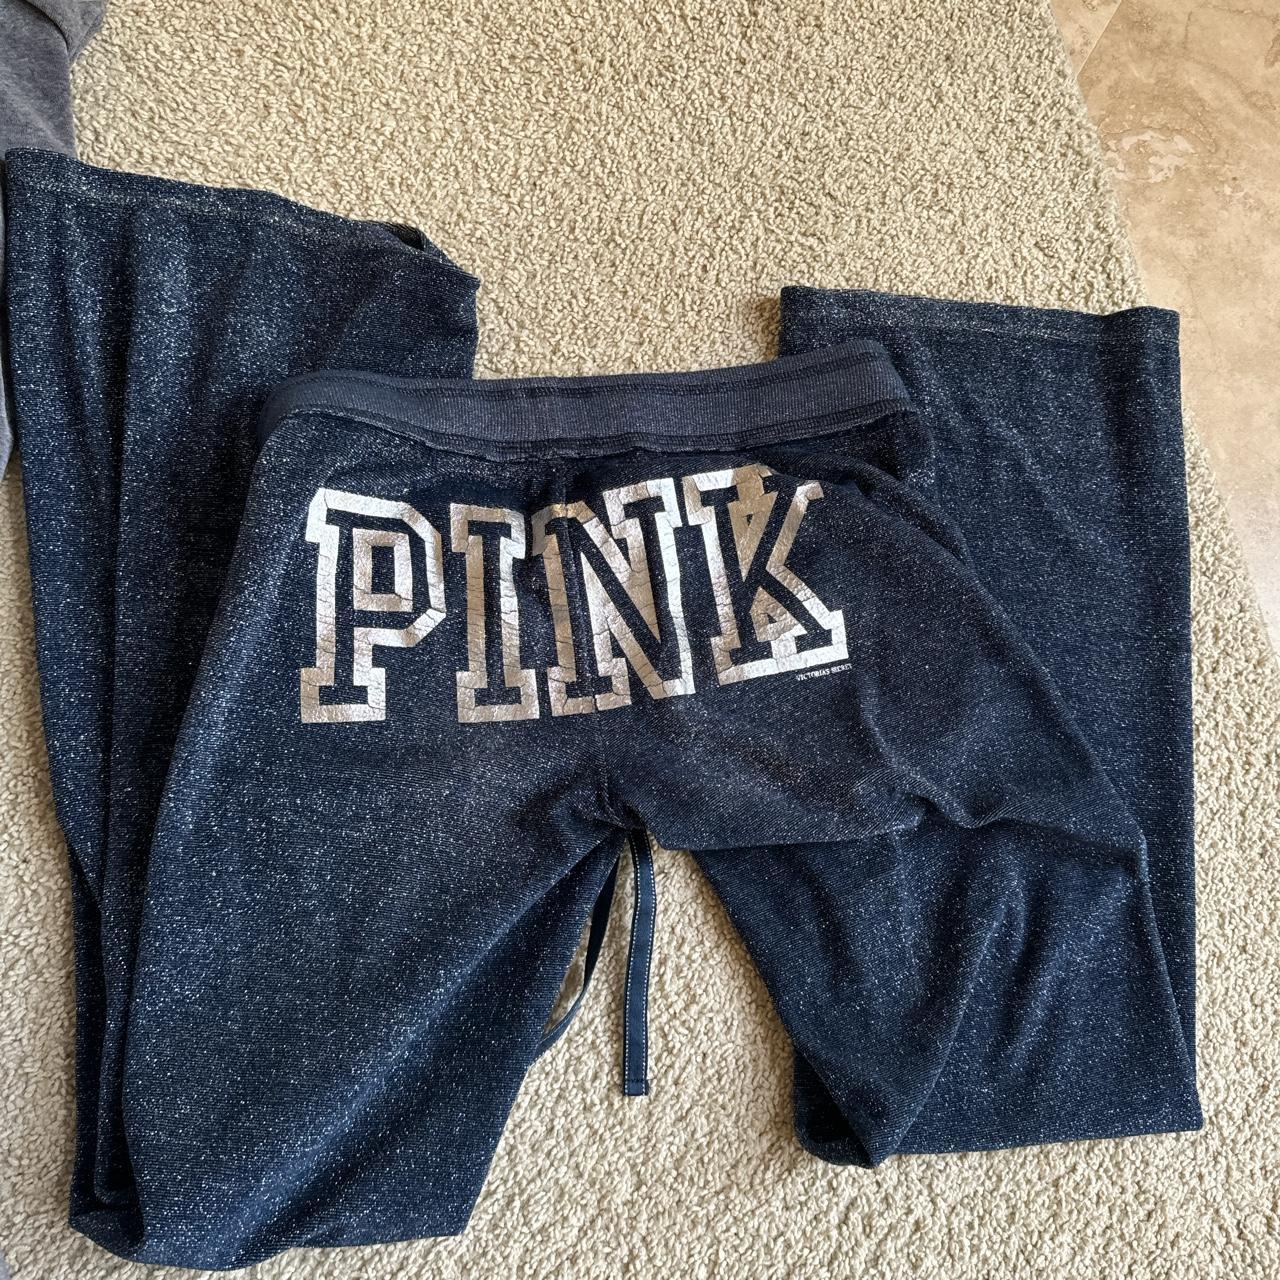 victoria's secret PINK sweatpants size small - Depop